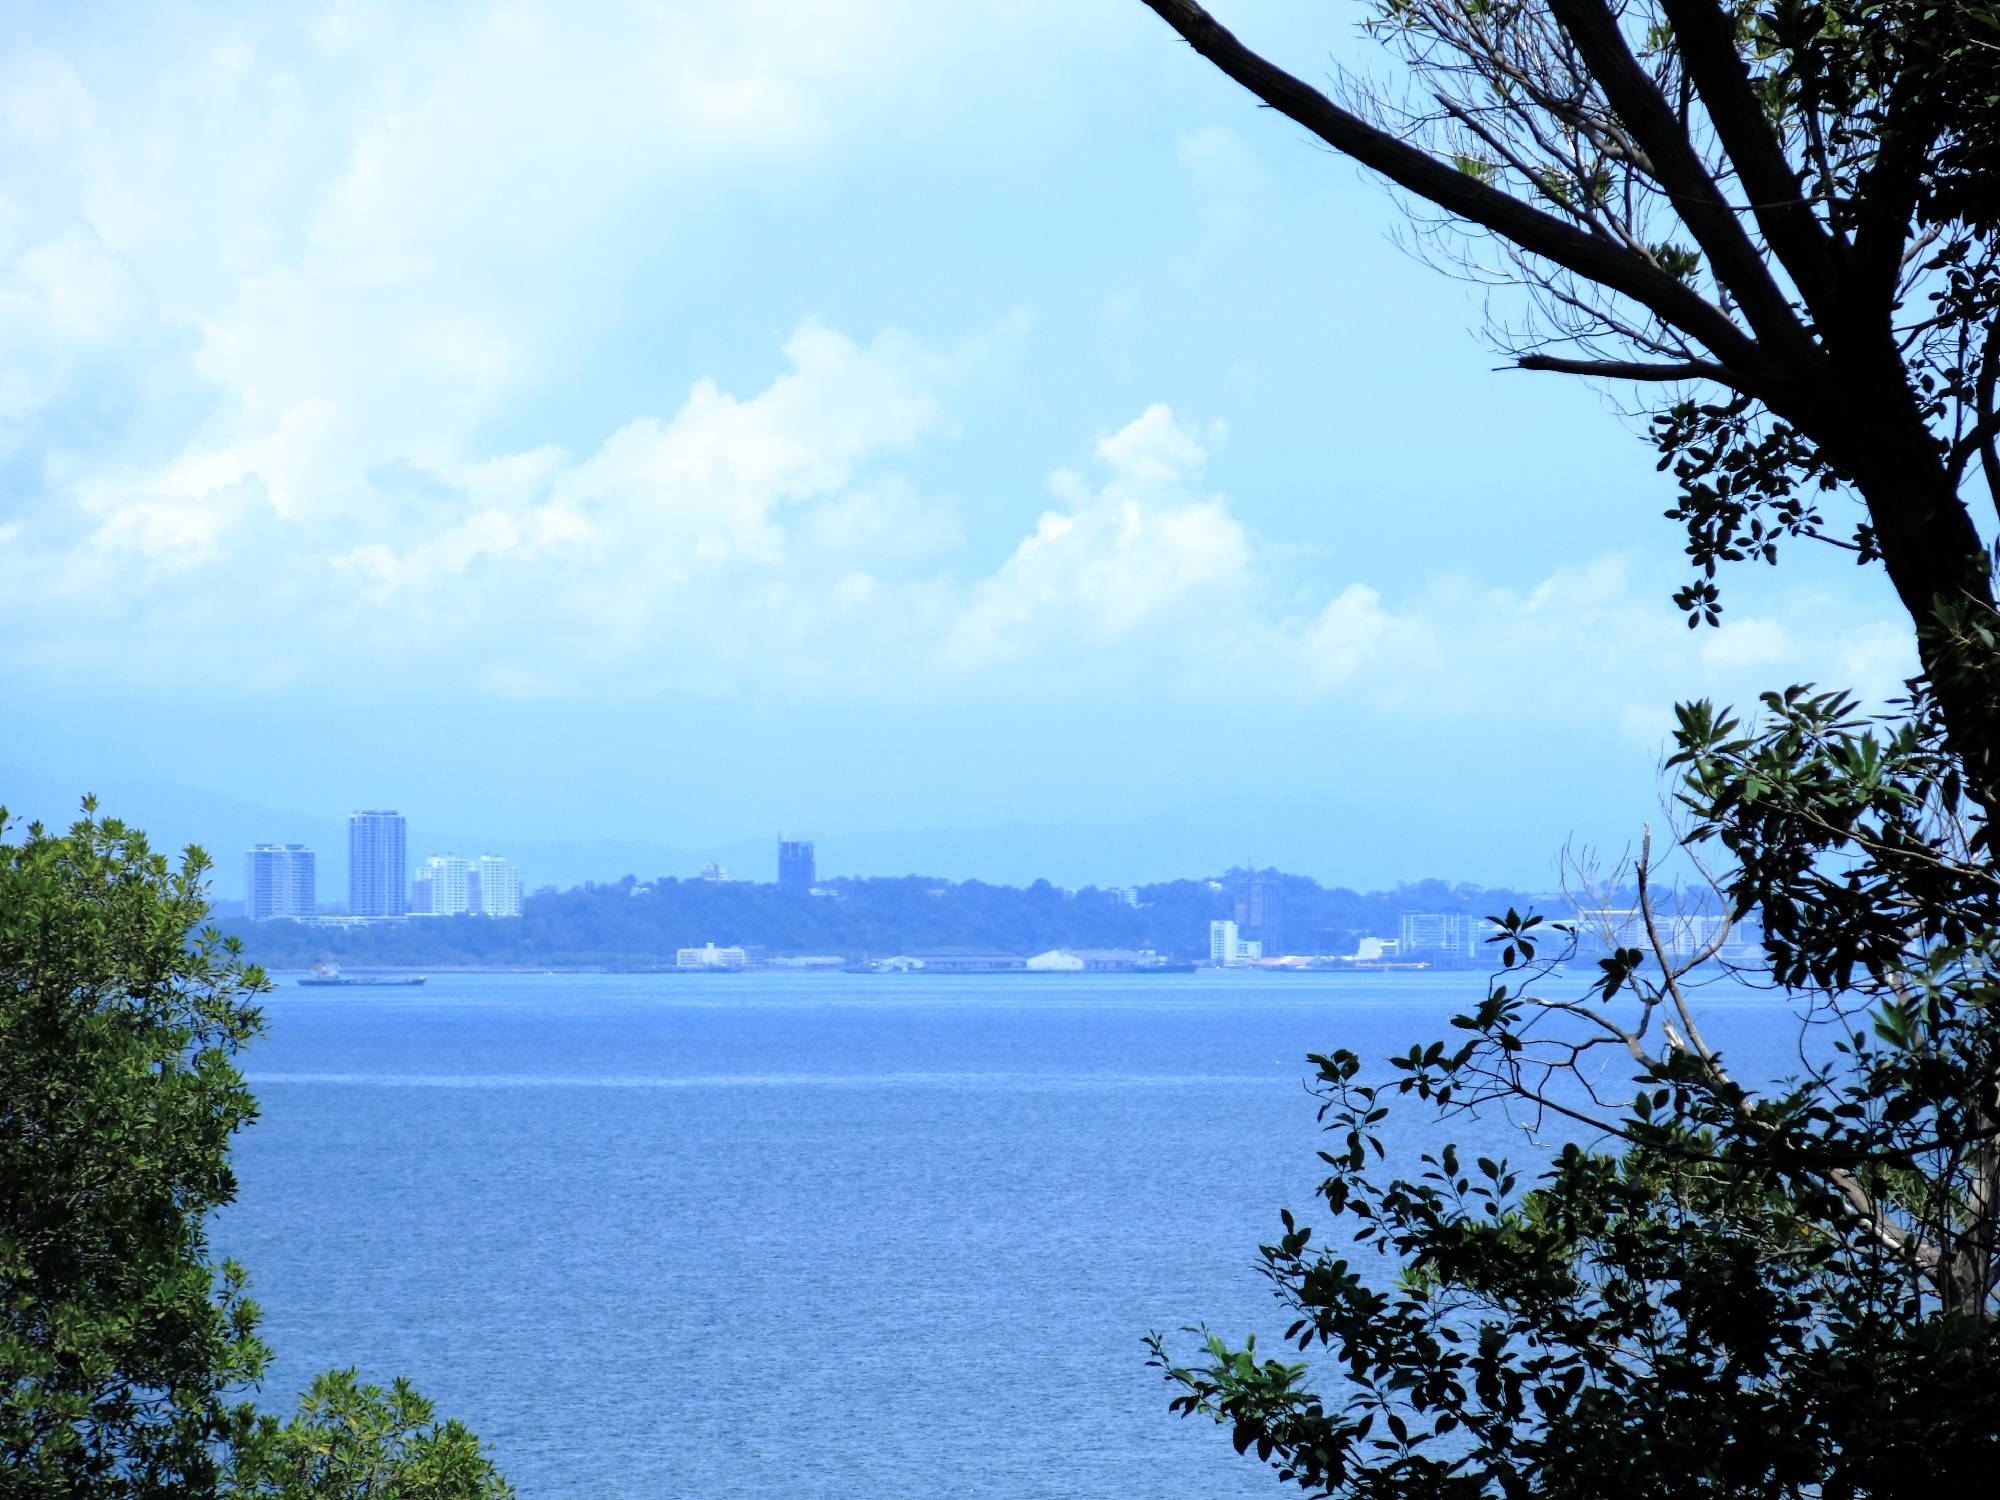 Mari Mari Sepanggar Island, Kota Kinabalu 